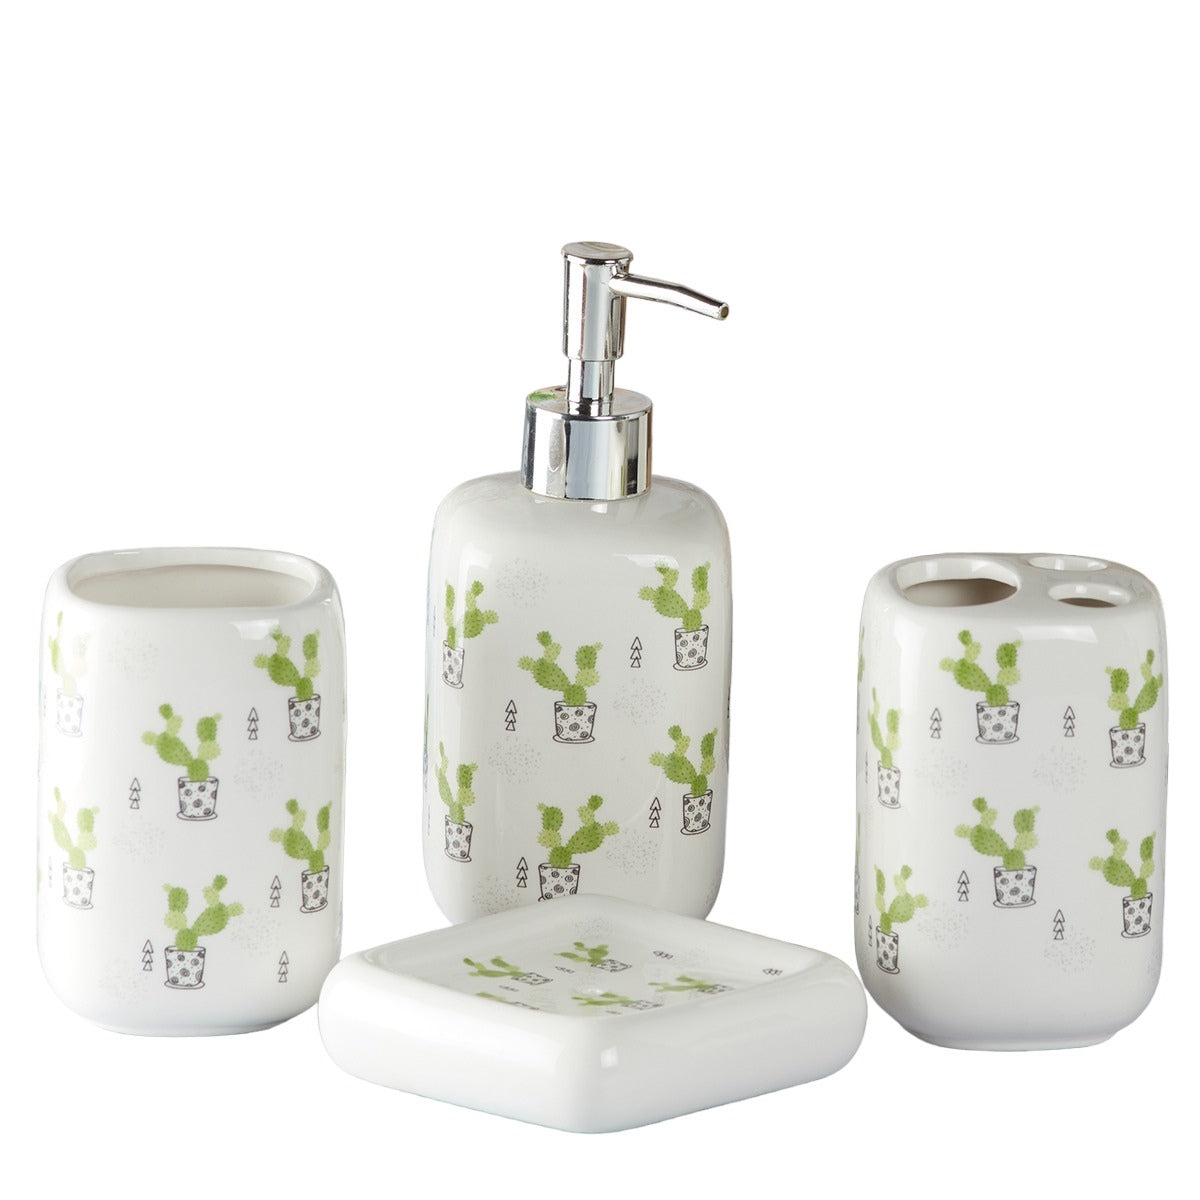 Ceramic Bathroom Accessories Set of 4 Bath Set with Soap Dispenser (9902)